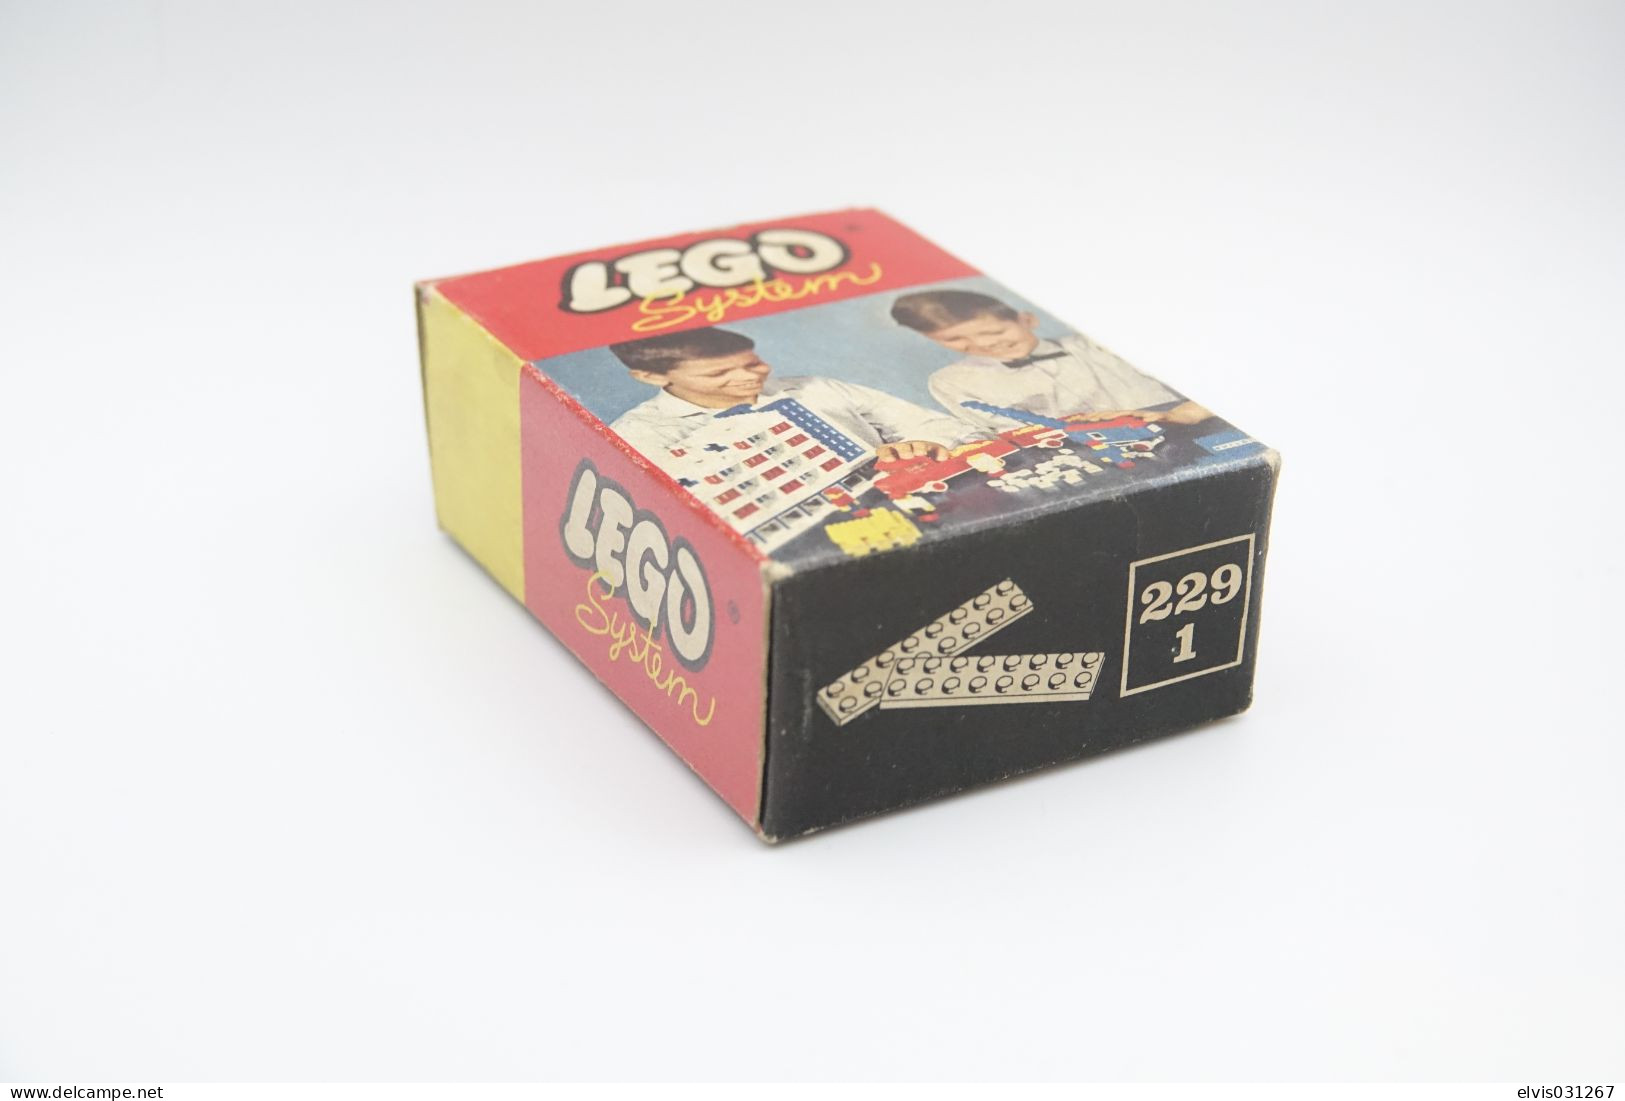 LEGO - 229.1 2 X 8 Plates With Box - Original Lego 1962 - Vintage - Catalogs